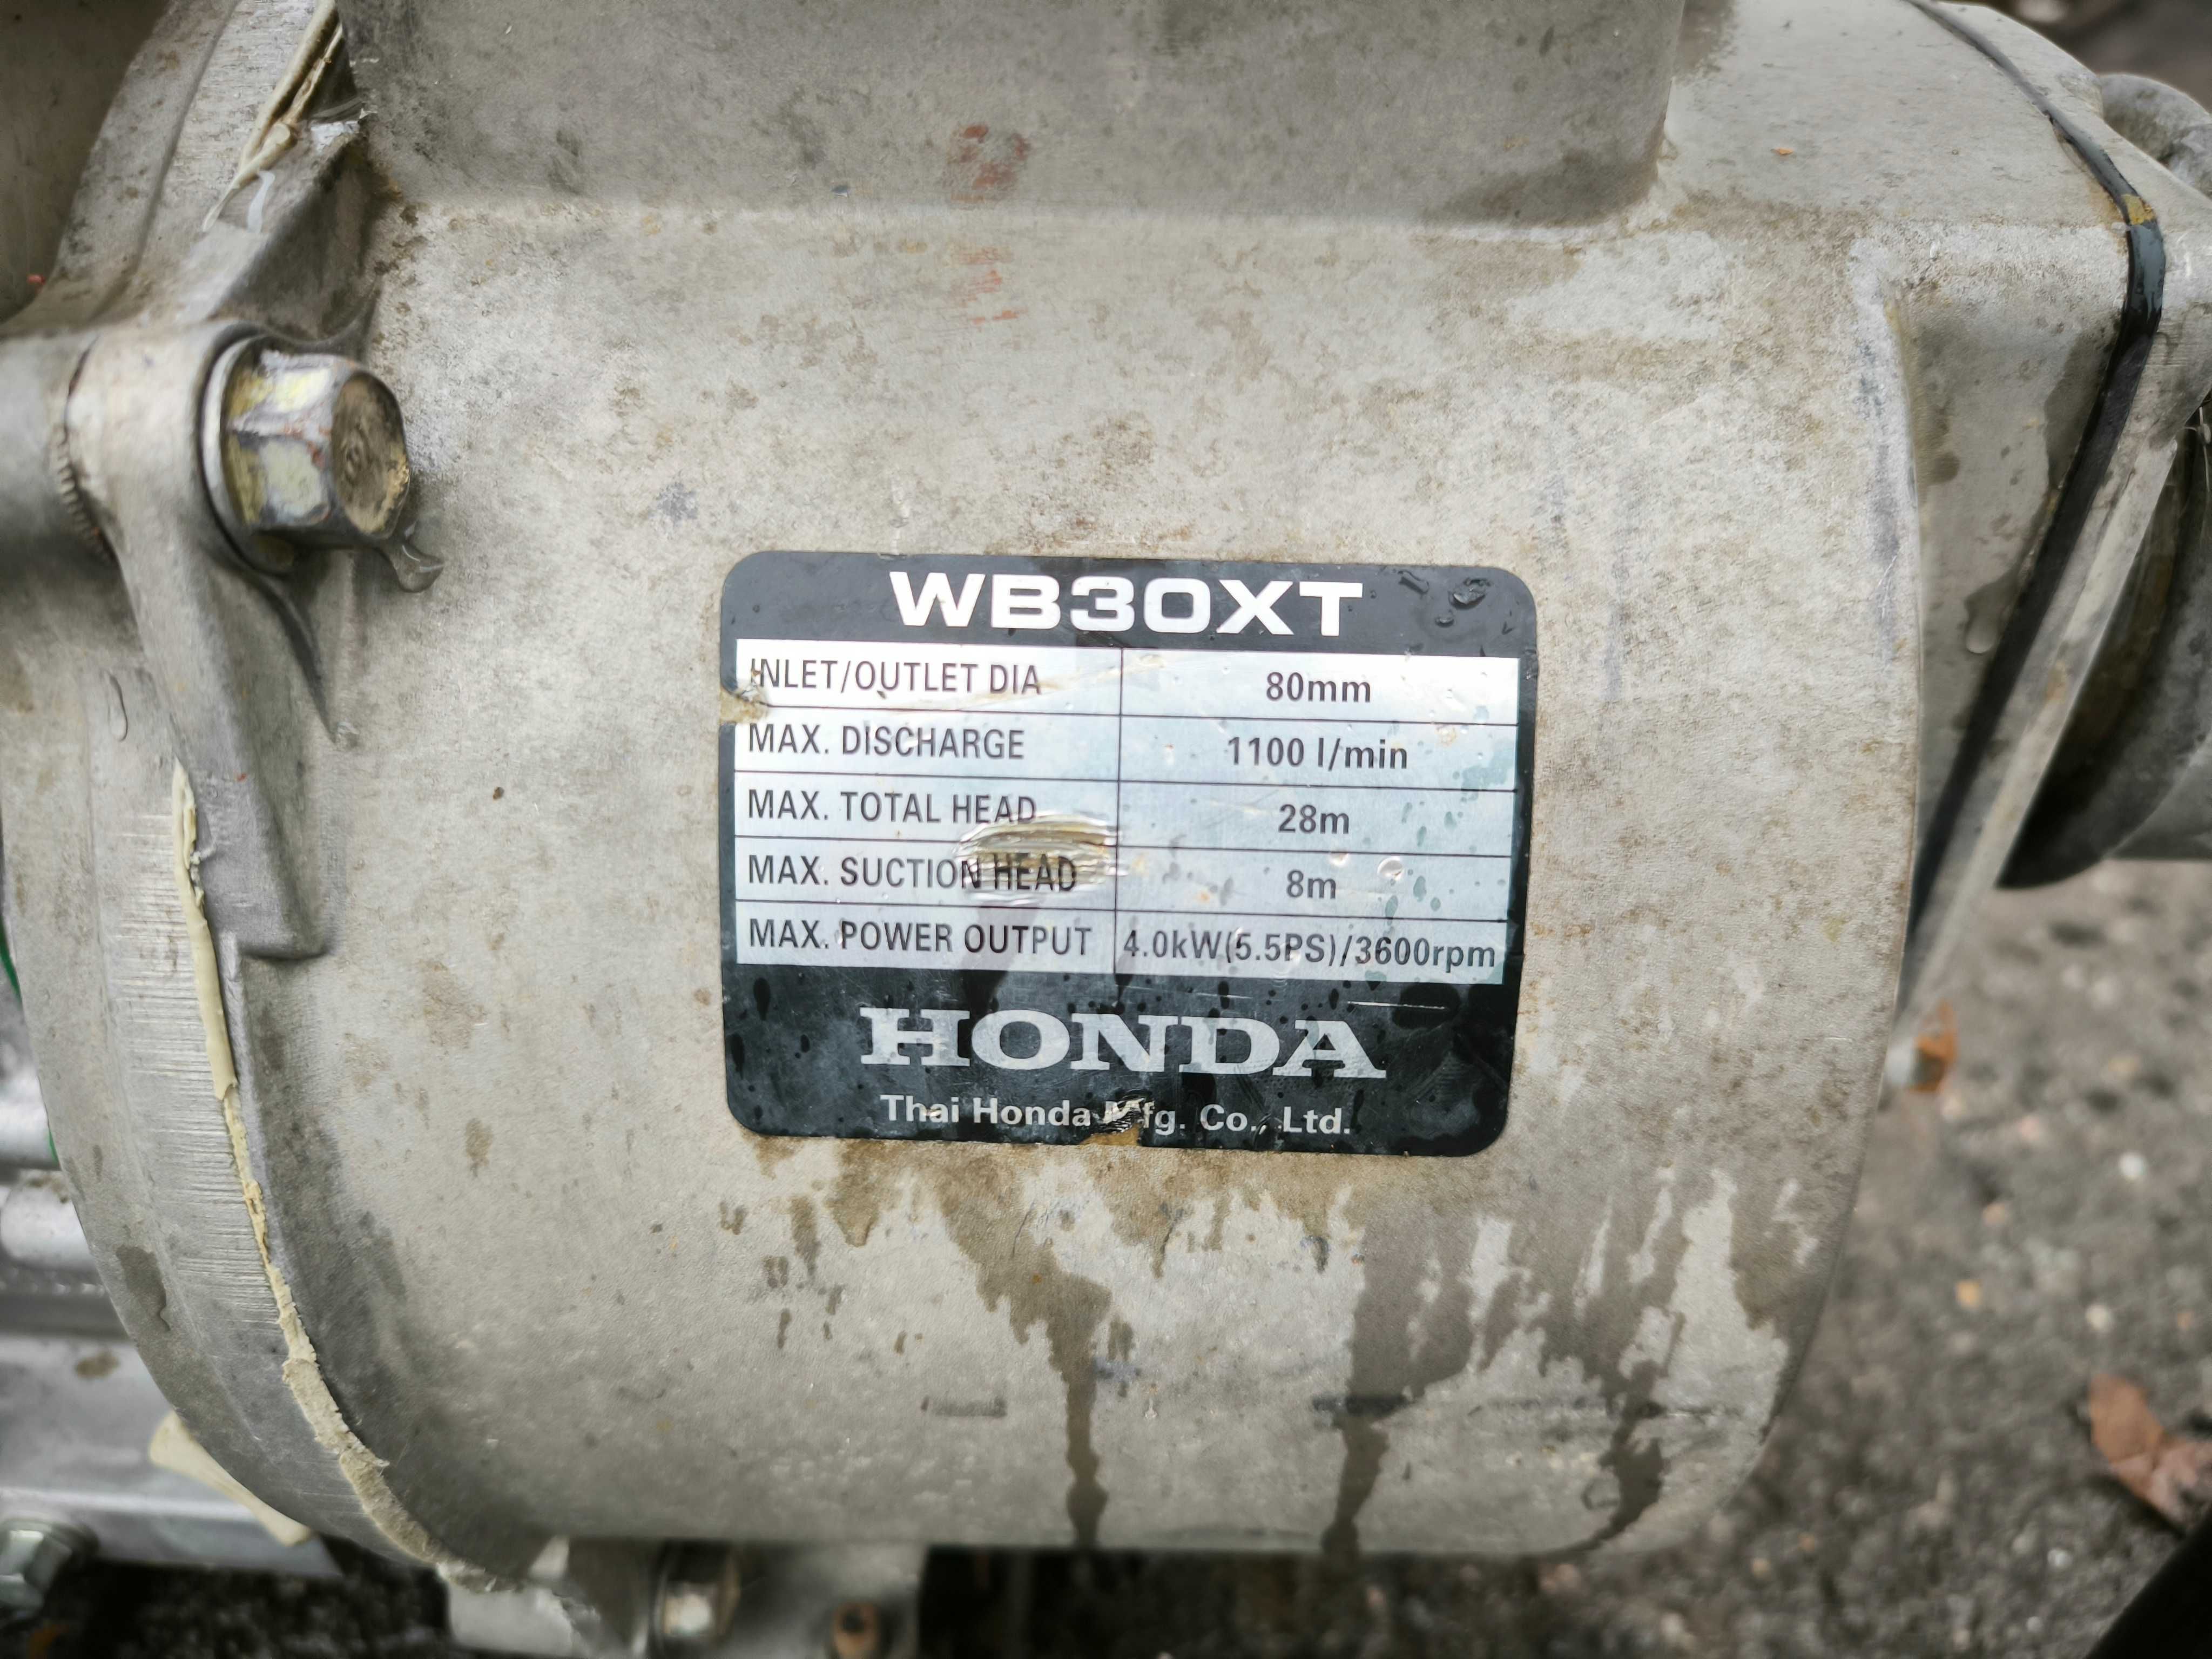 Pompa honda WB30XT